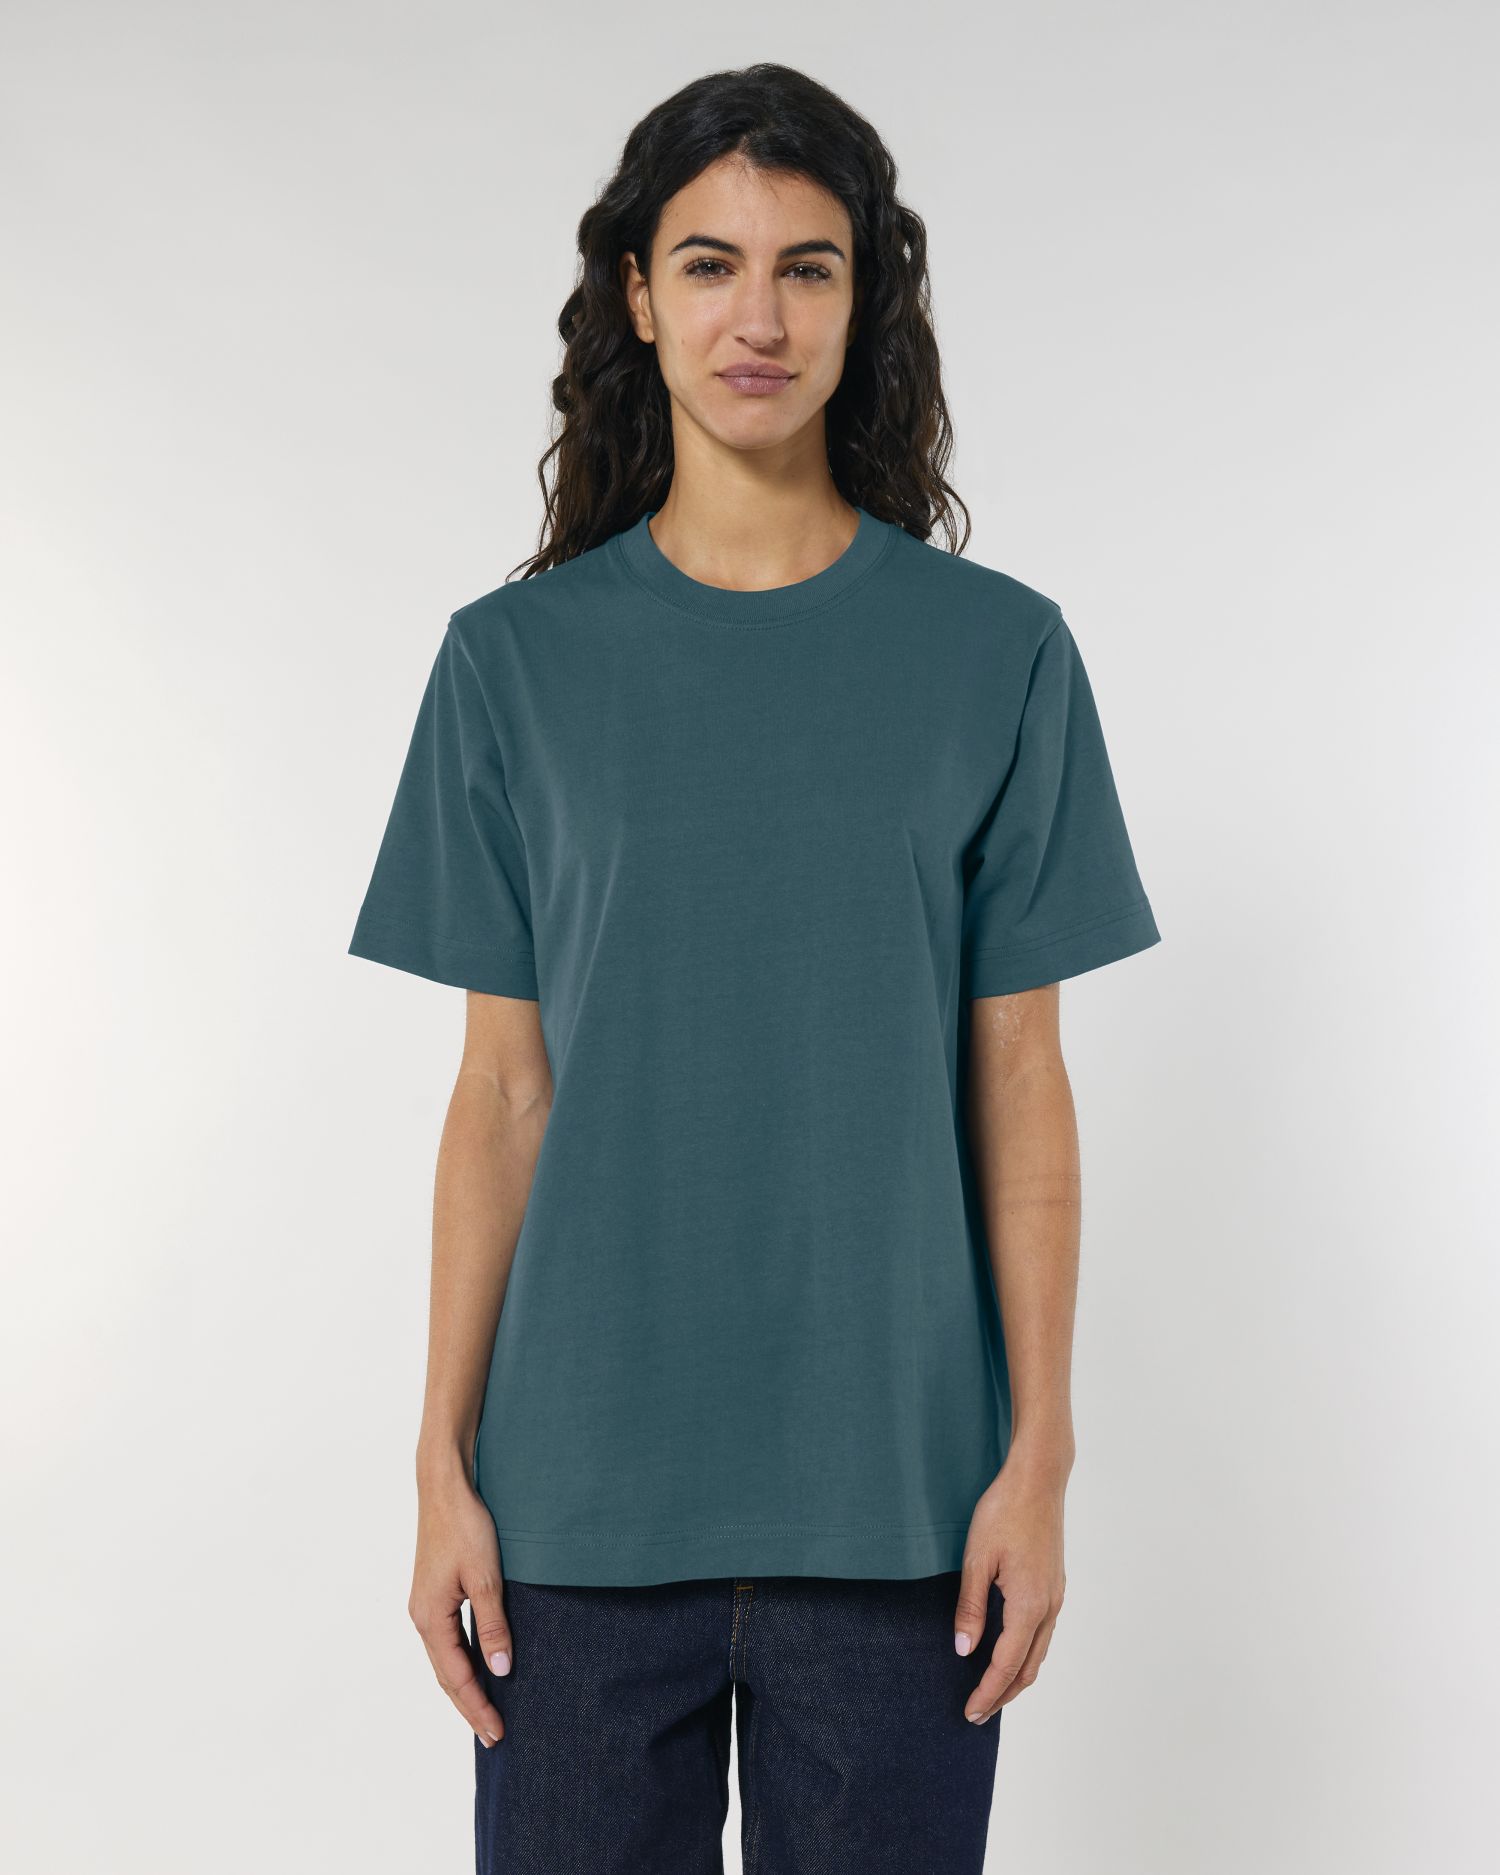 T-Shirt Freestyler in Farbe Stargazer